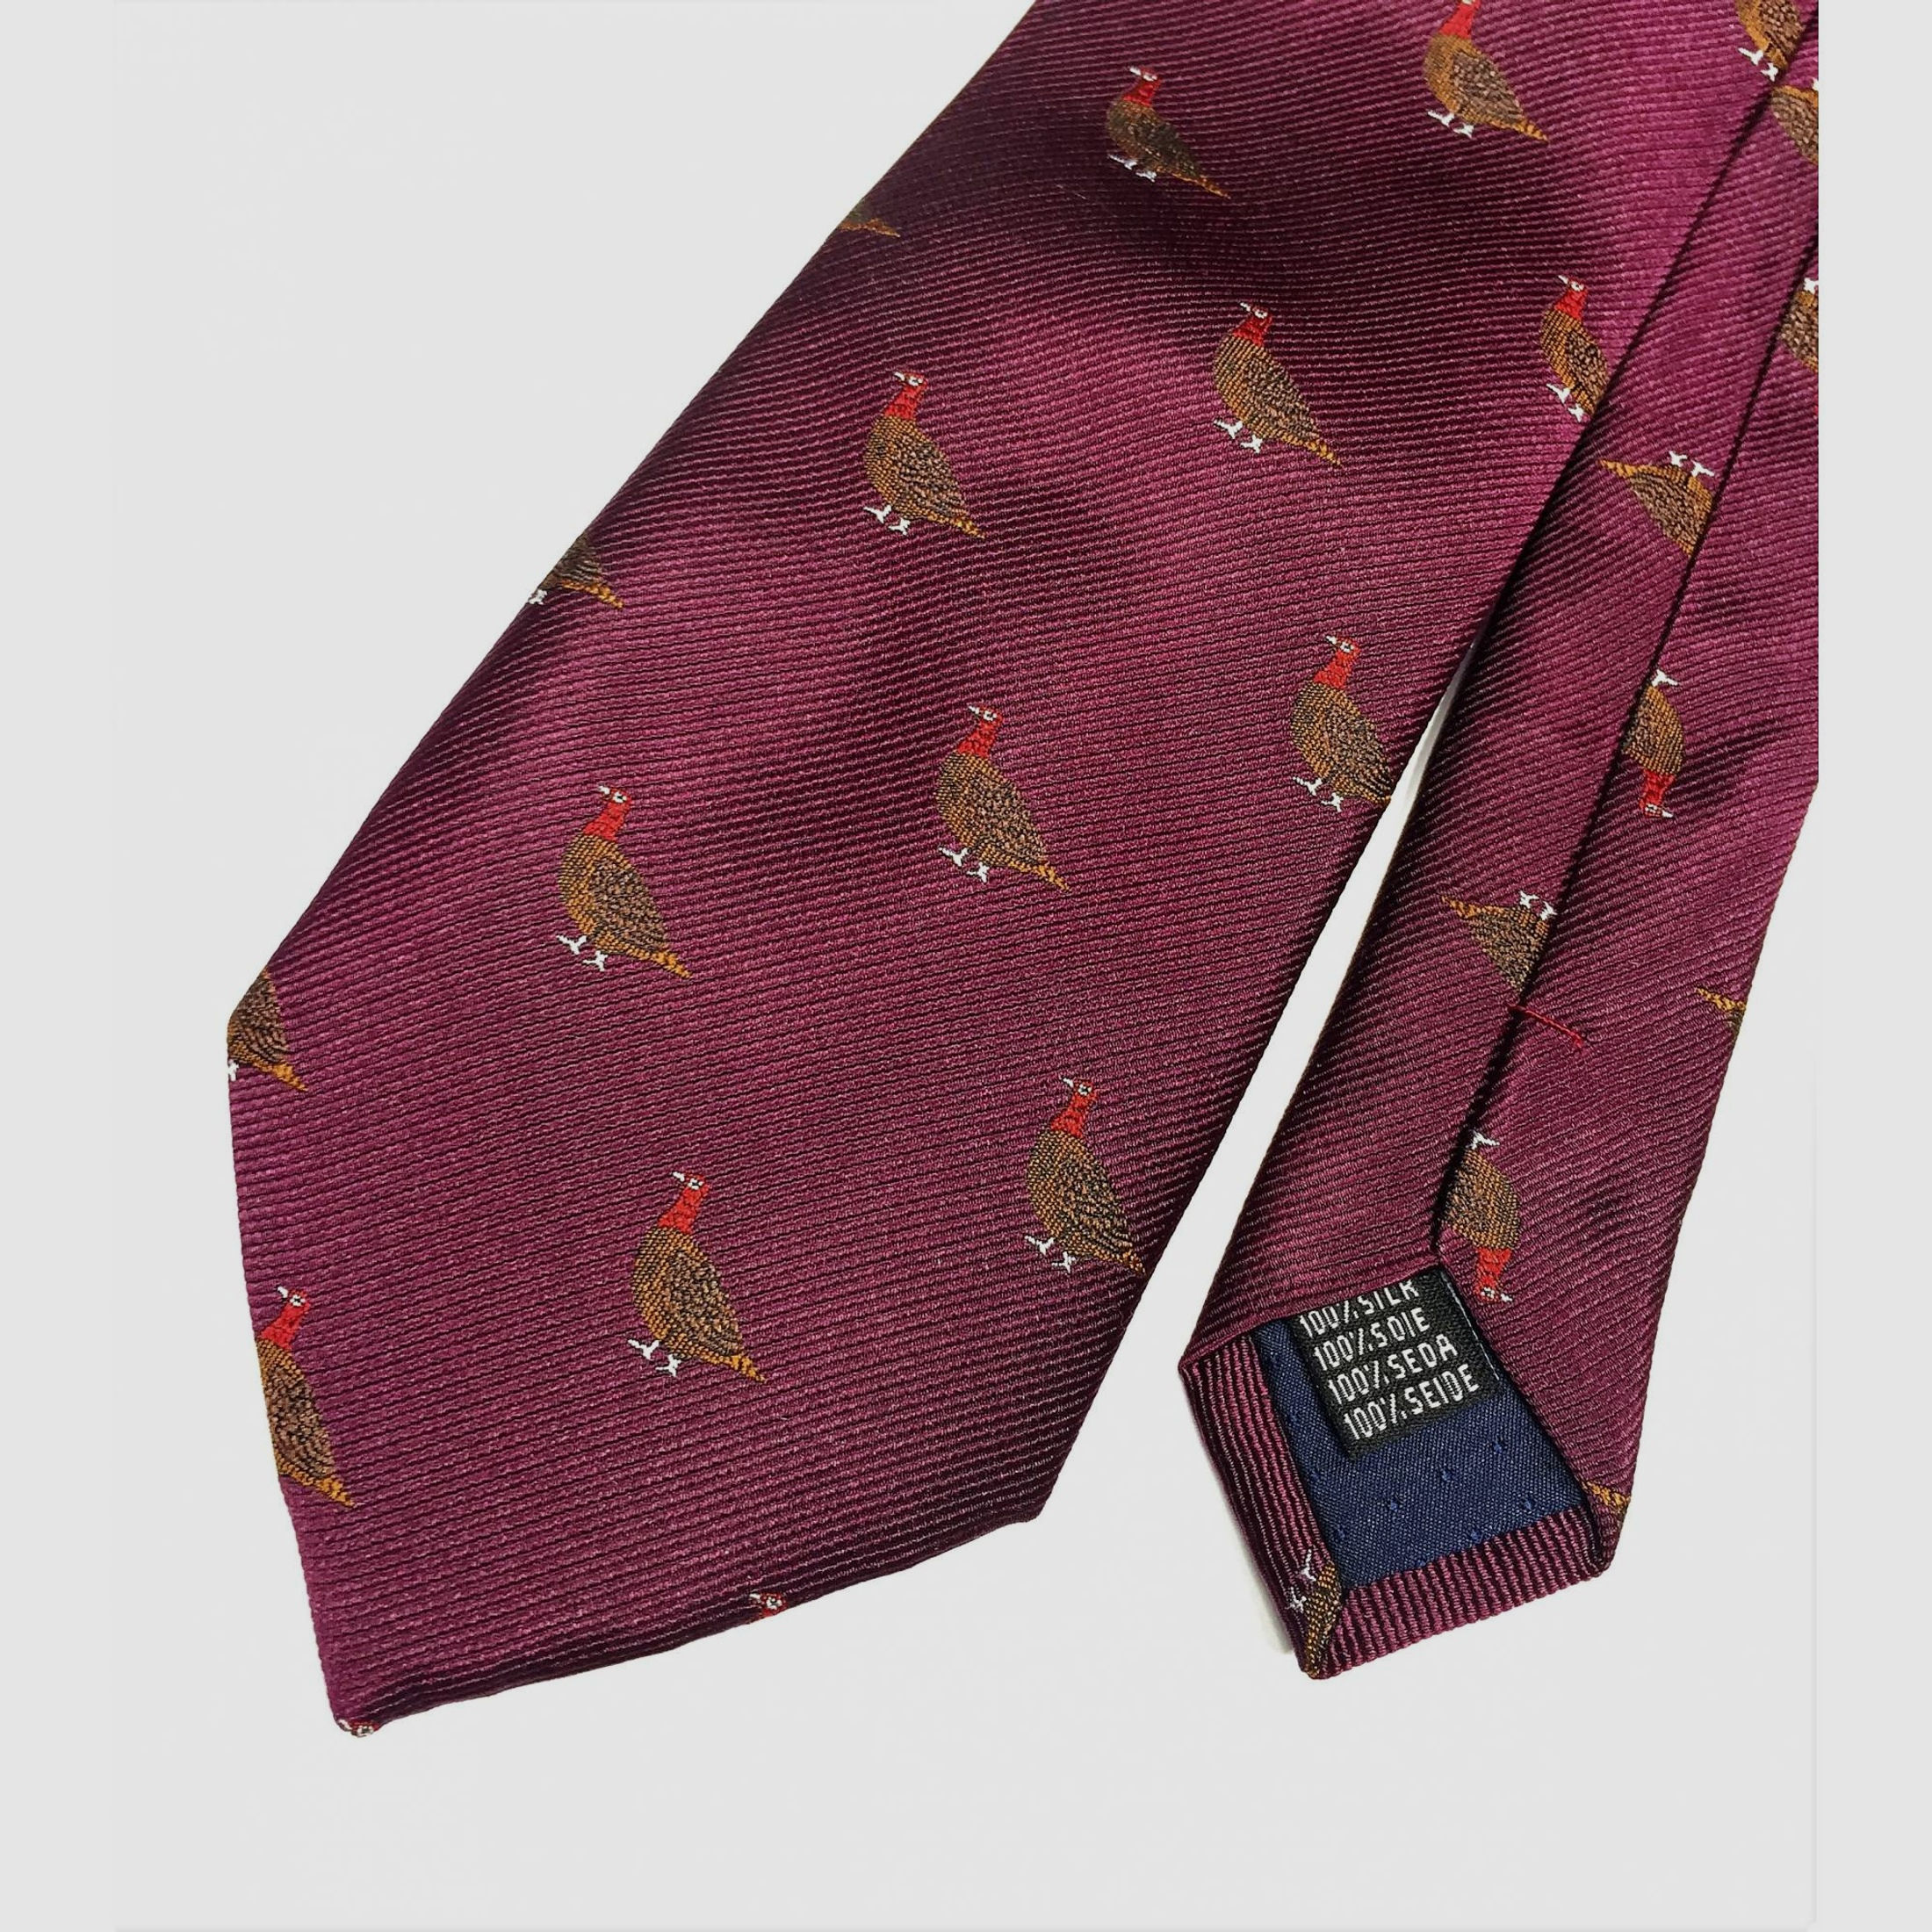 Krawatte "The Grouse Collection", Farbe Moorheather, Sammler-Edition